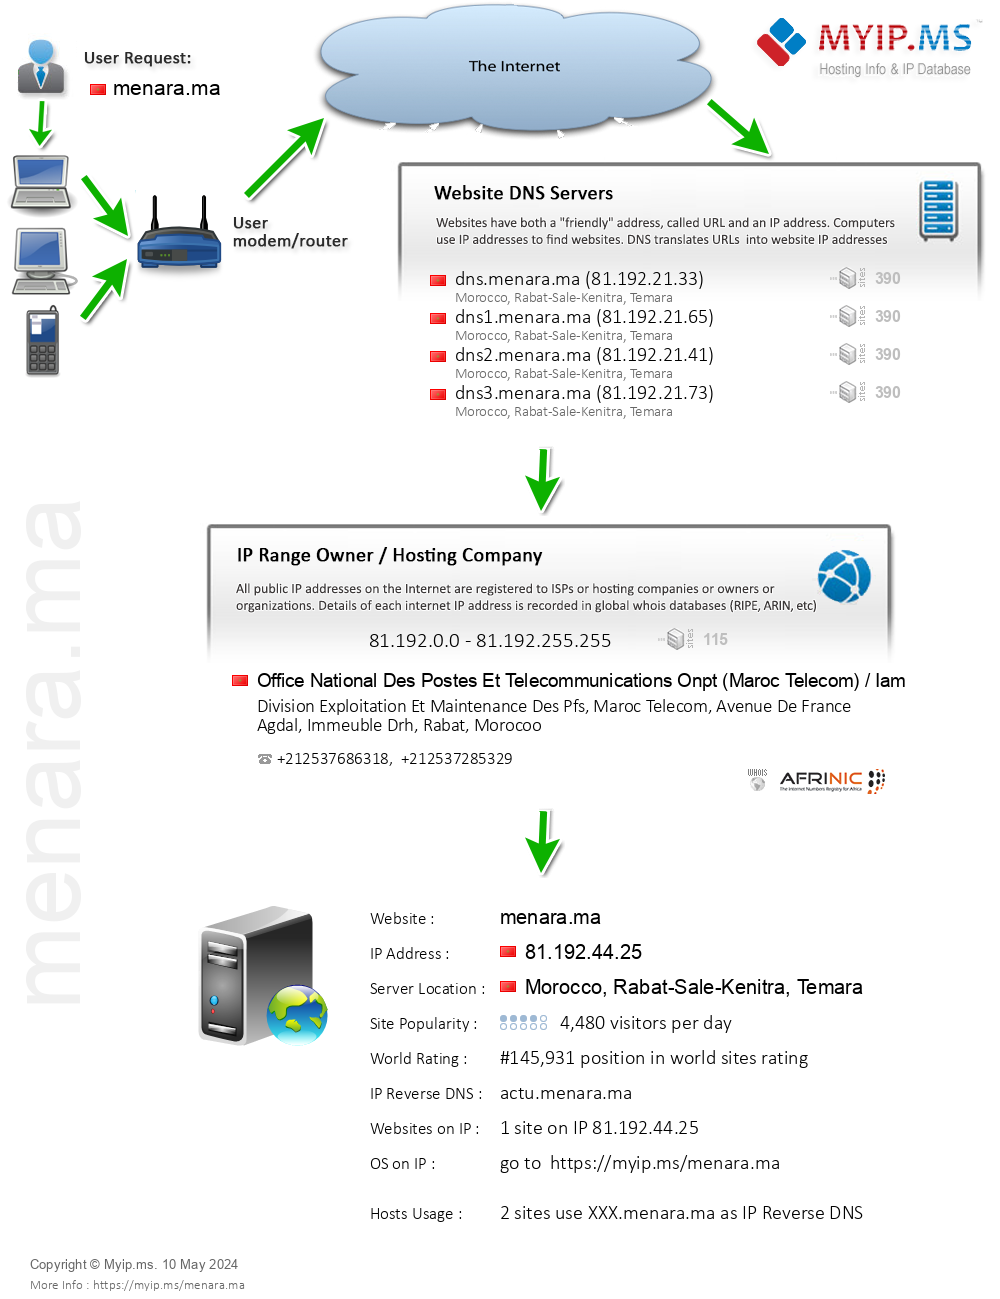 Menara.ma - Website Hosting Visual IP Diagram